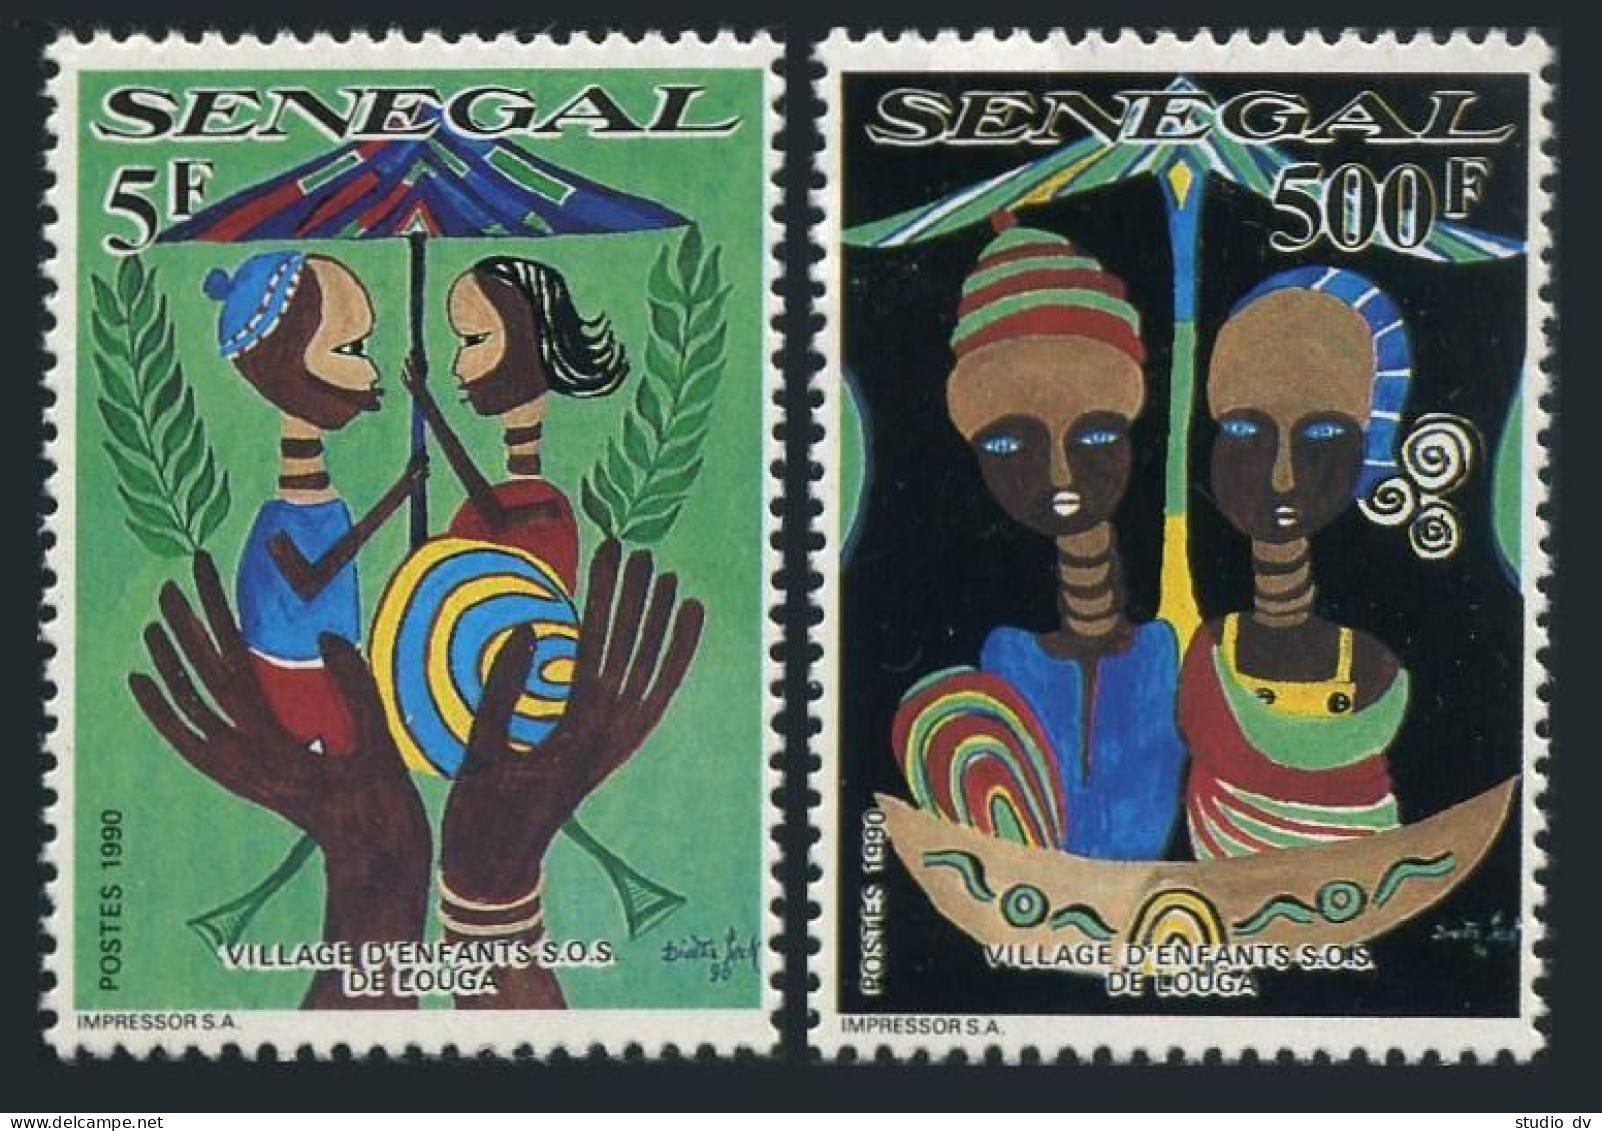 Senegal 895-896,MNH.Michel 1091-1092. Multinational Postal School,20th Ann.1990. - Senegal (1960-...)